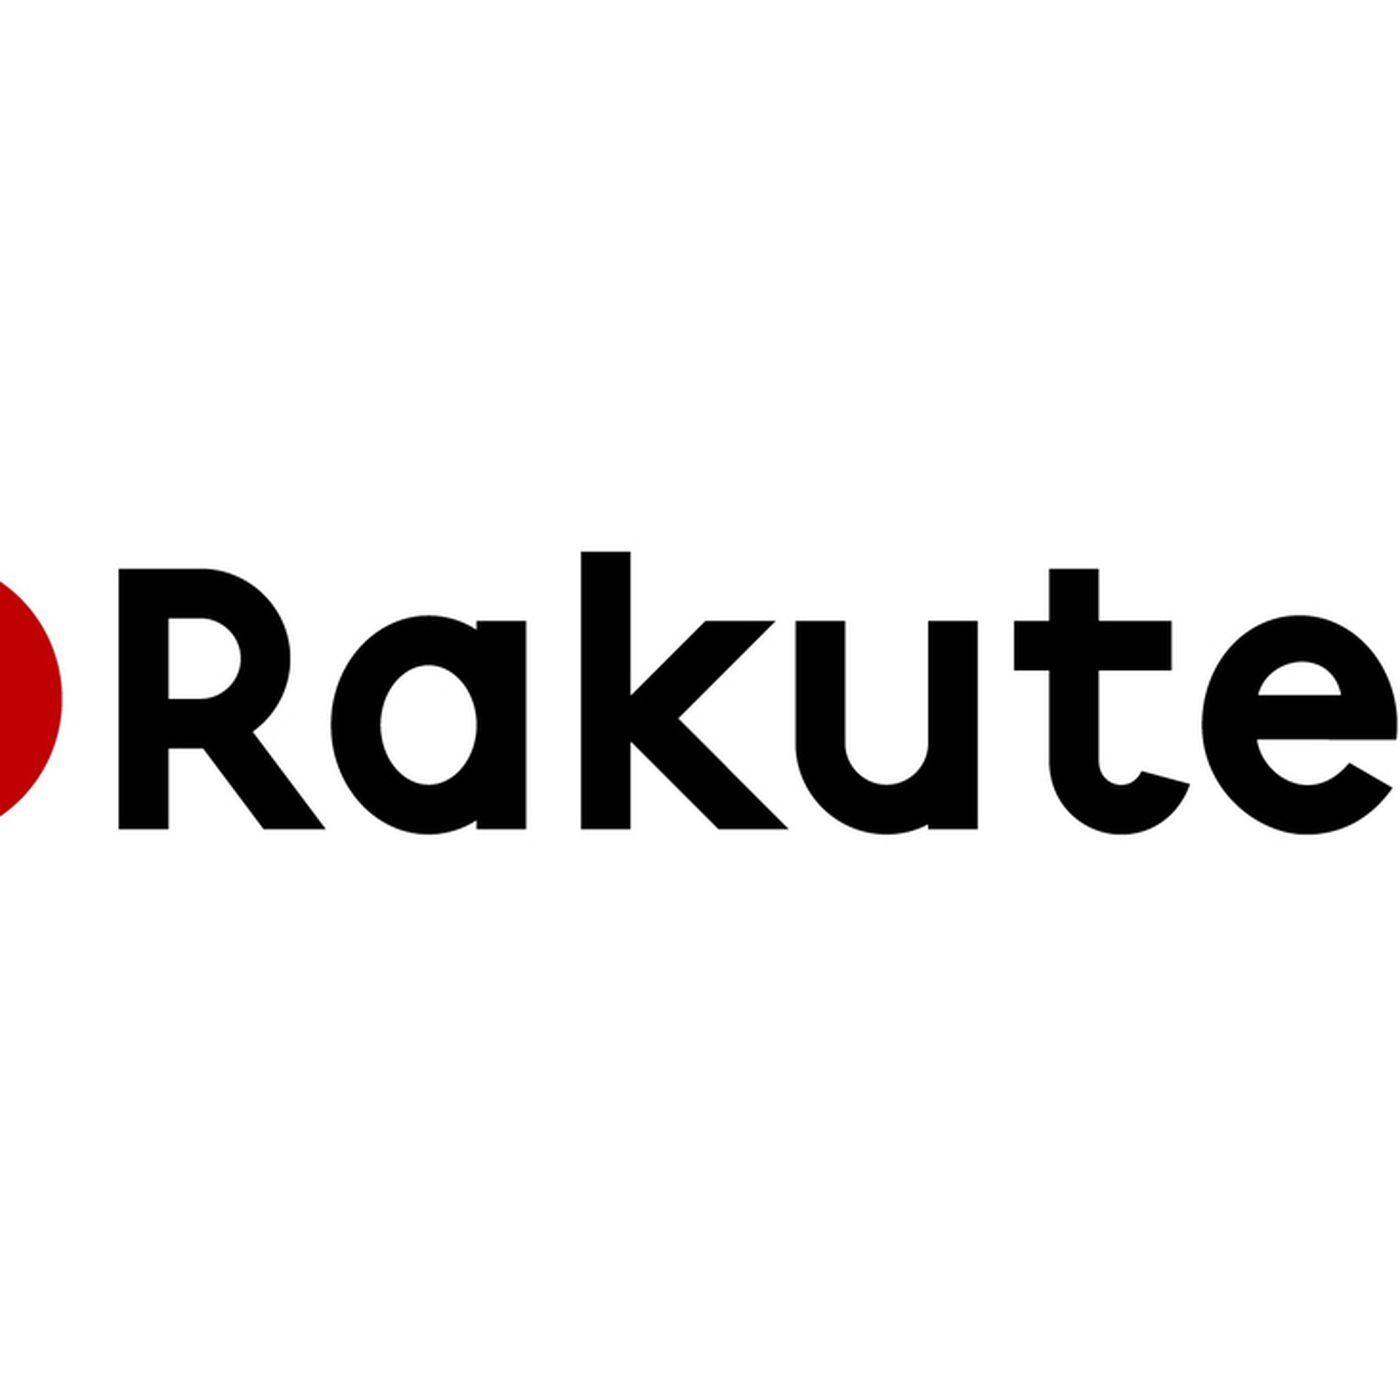 Rakuten Logo - How Rakuten, the Amazon.com of Japan, plans to make a name